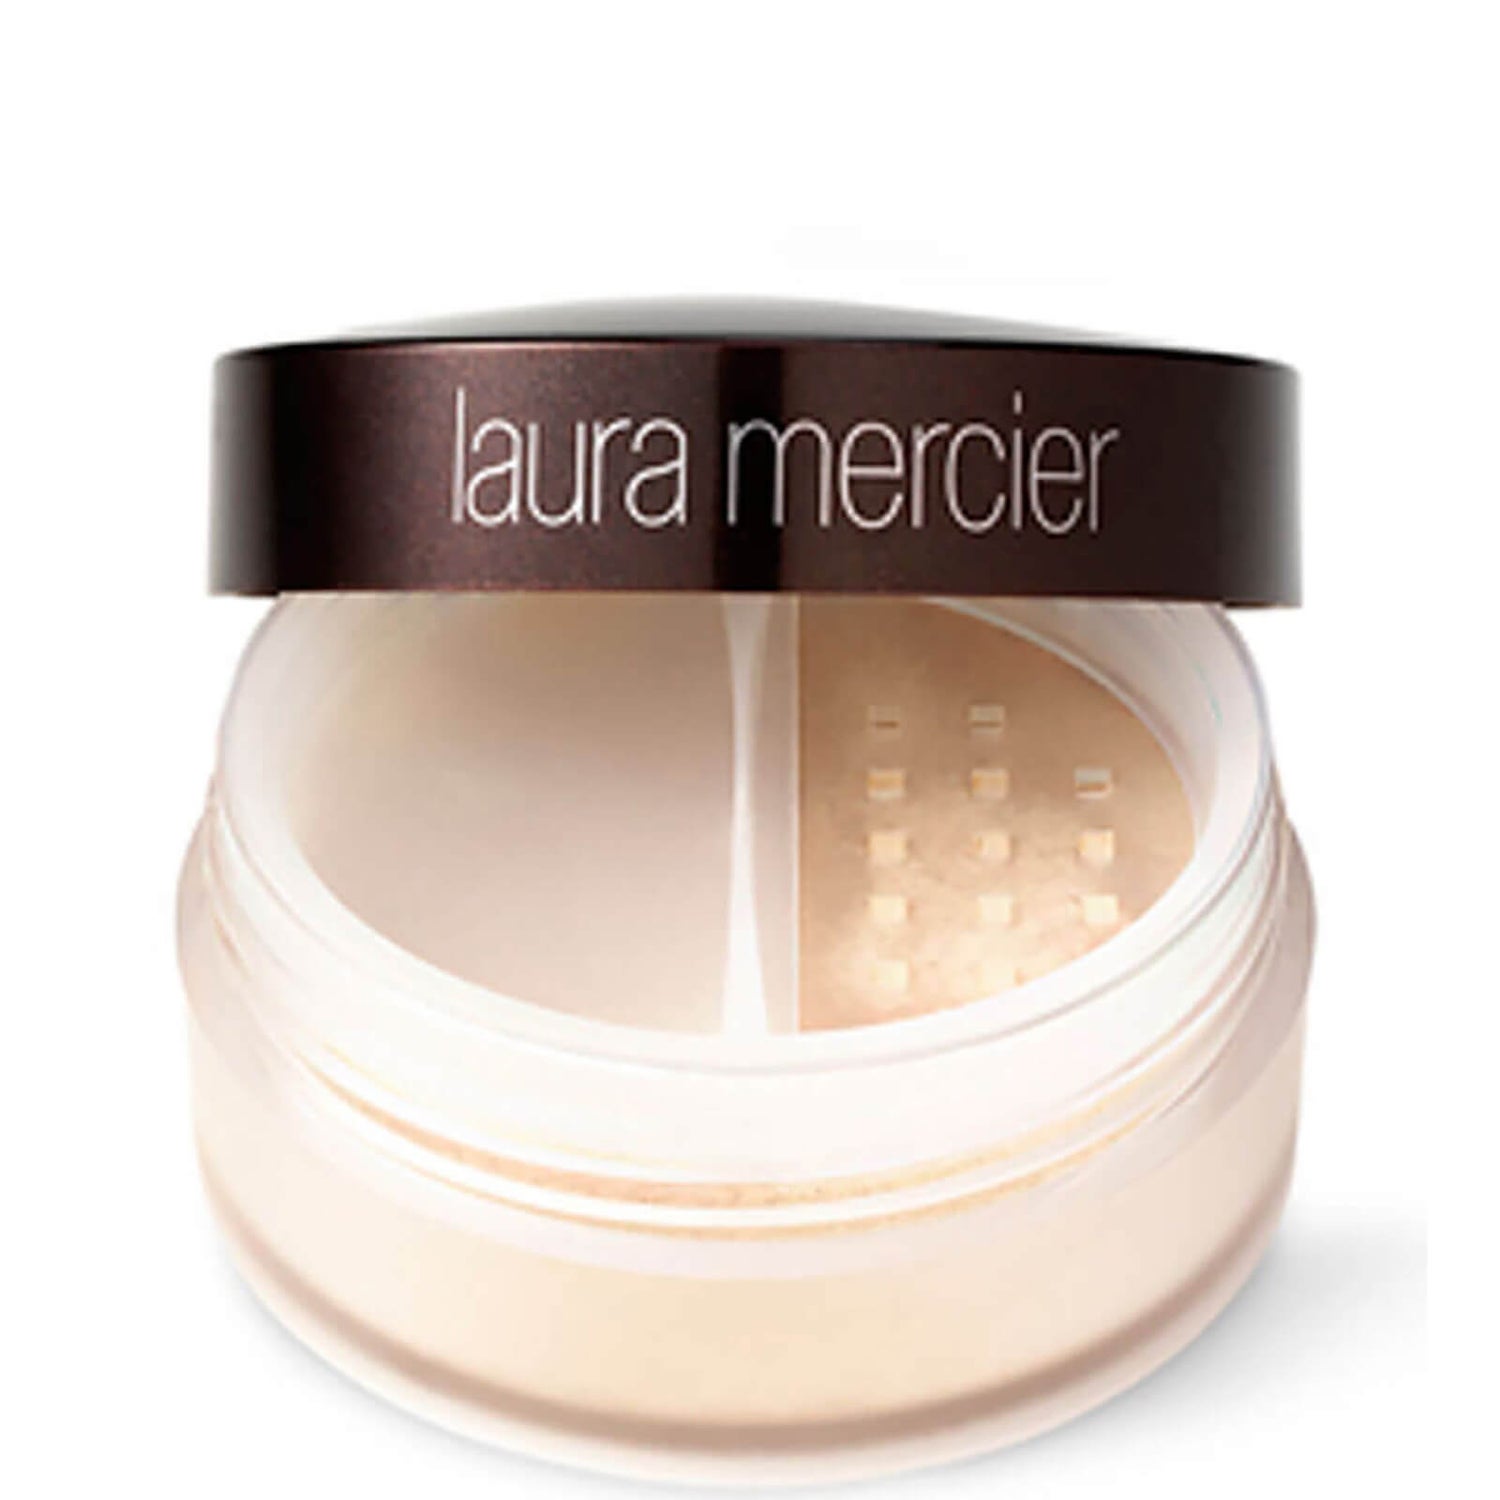 Laura Mercier Mineral Powder